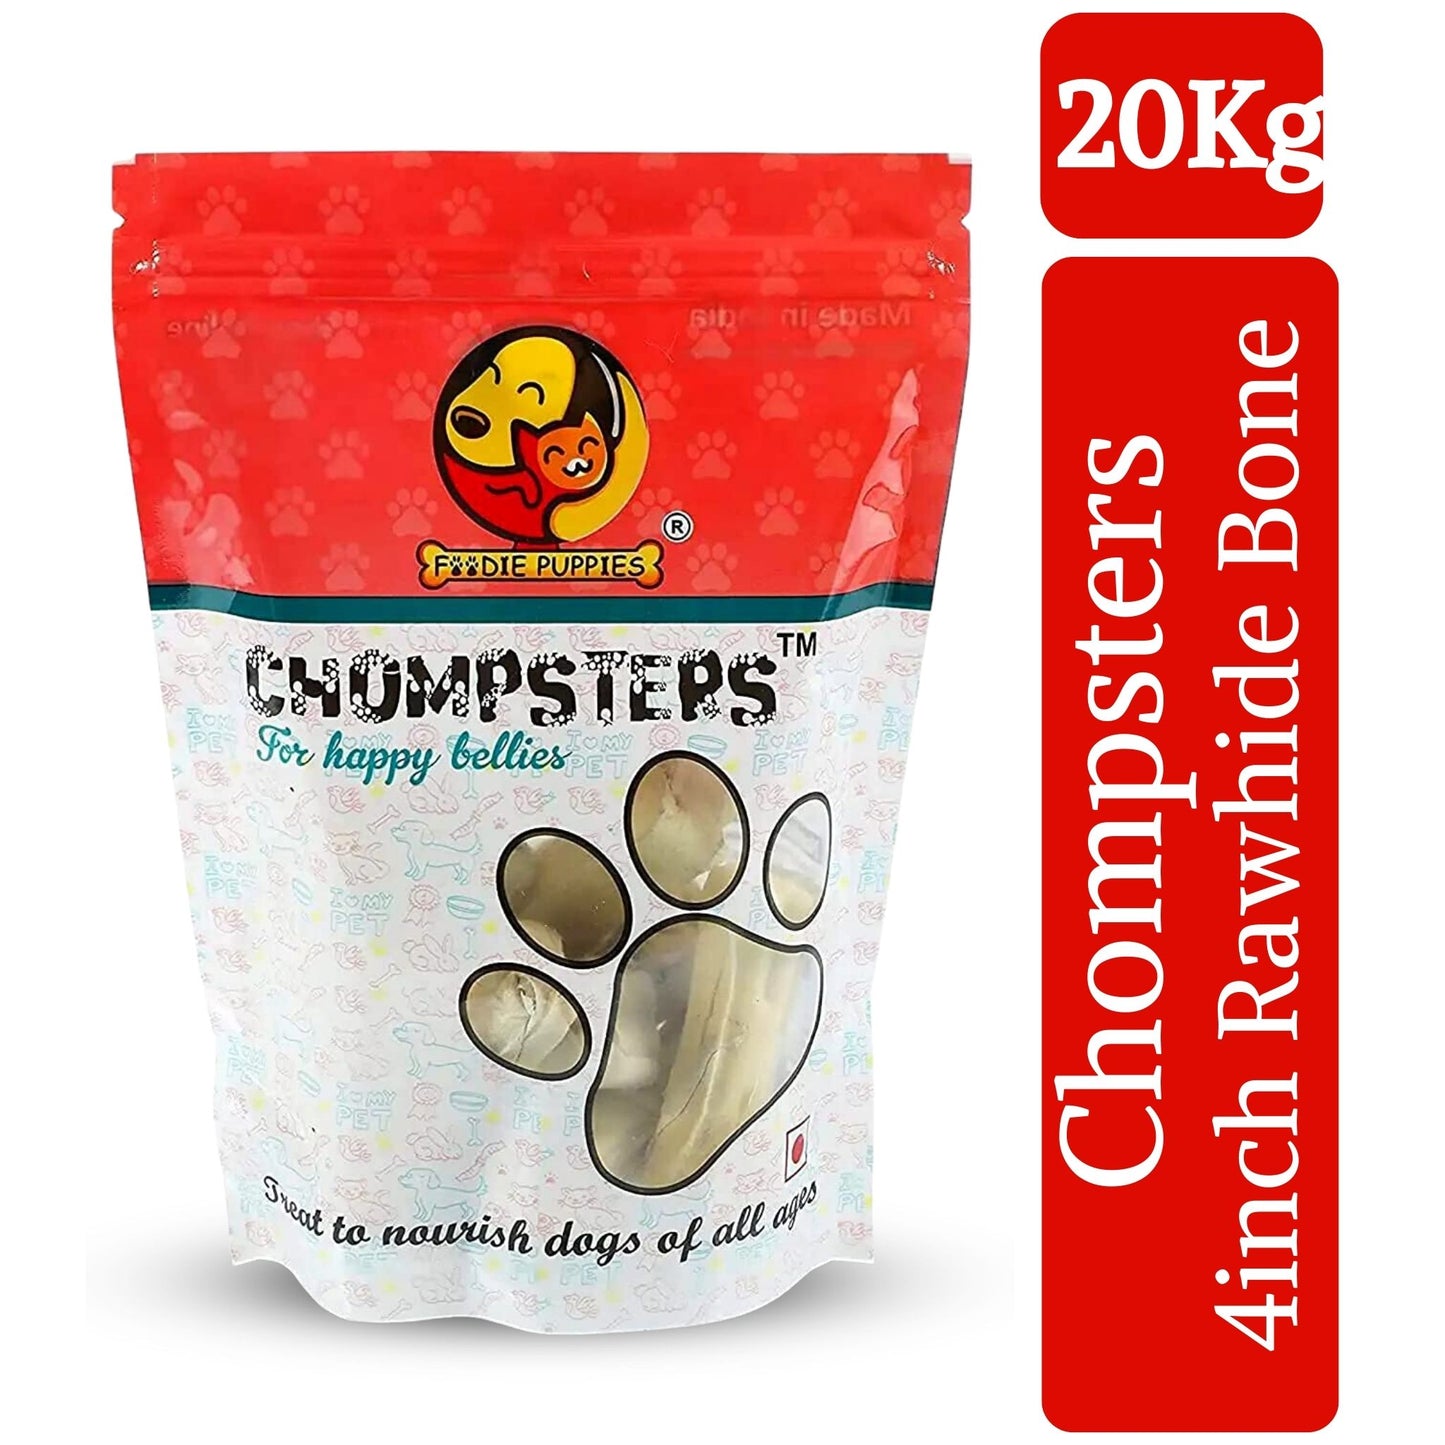 Foodie Puppies Chompsters Rawhide Bone for Dogs - 4inch Bone, 20Kg